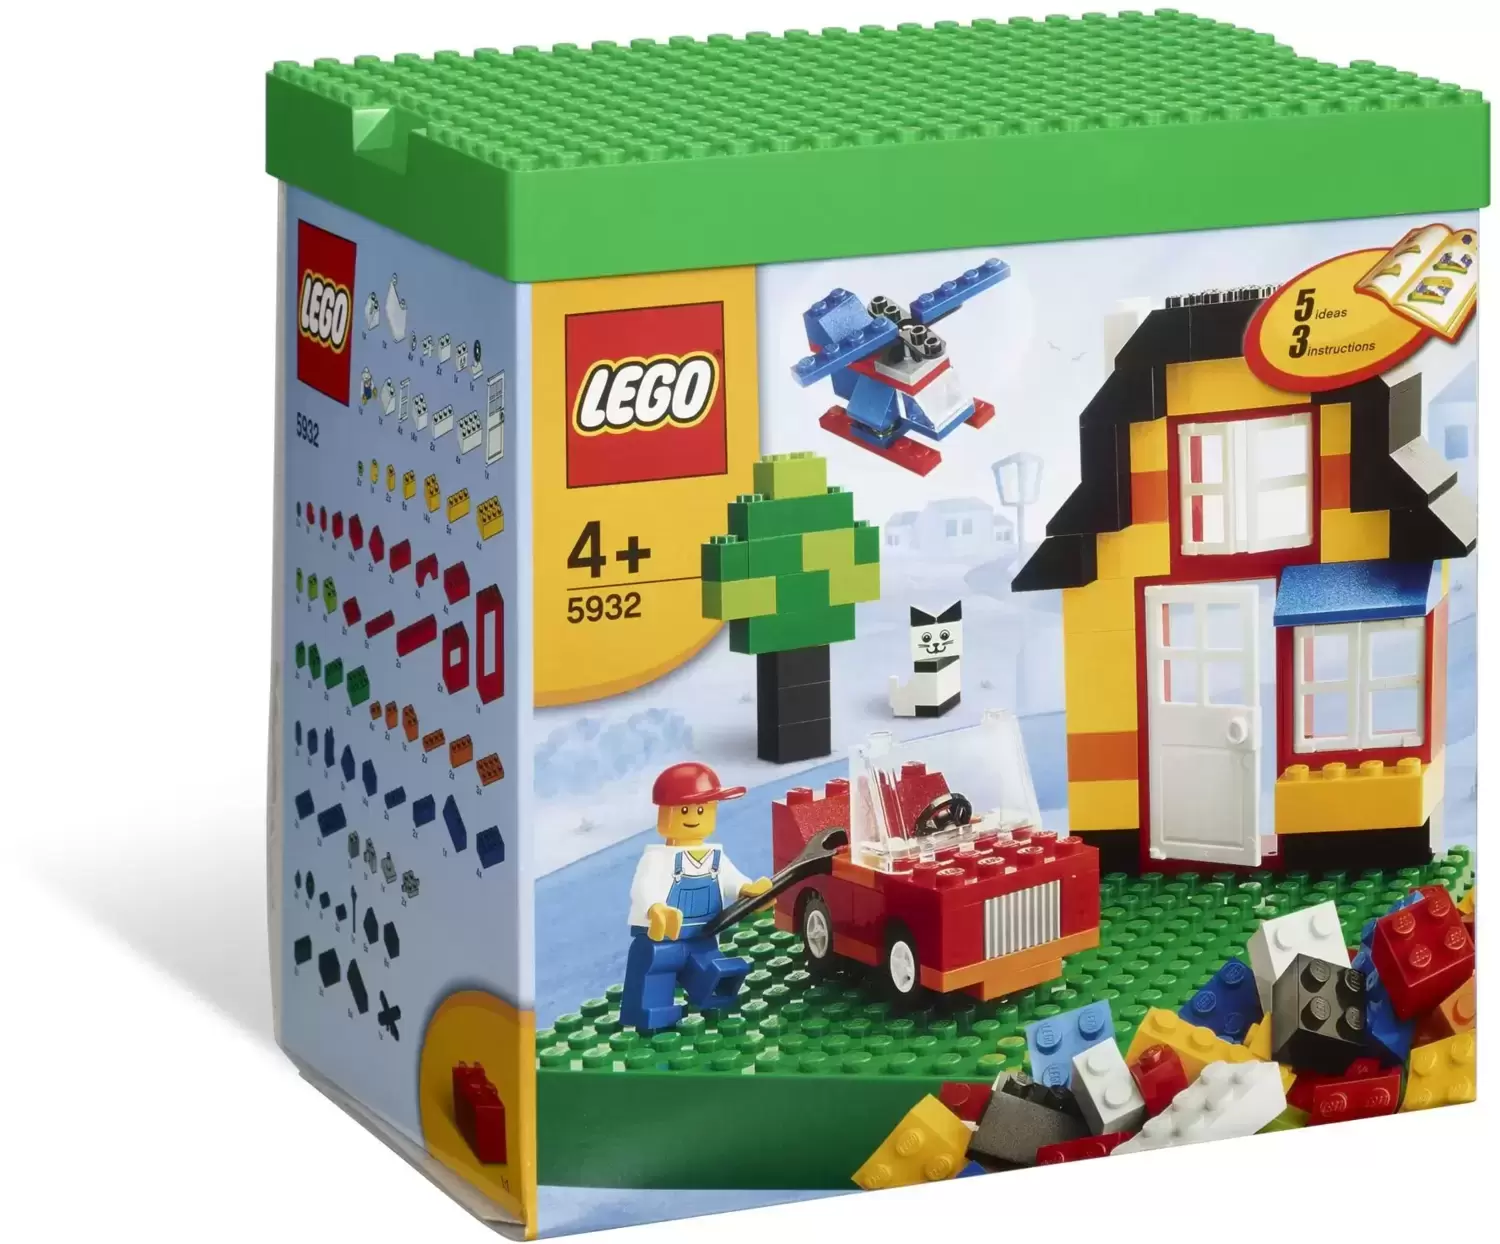 LEGO Juniors - My first LEGO Set